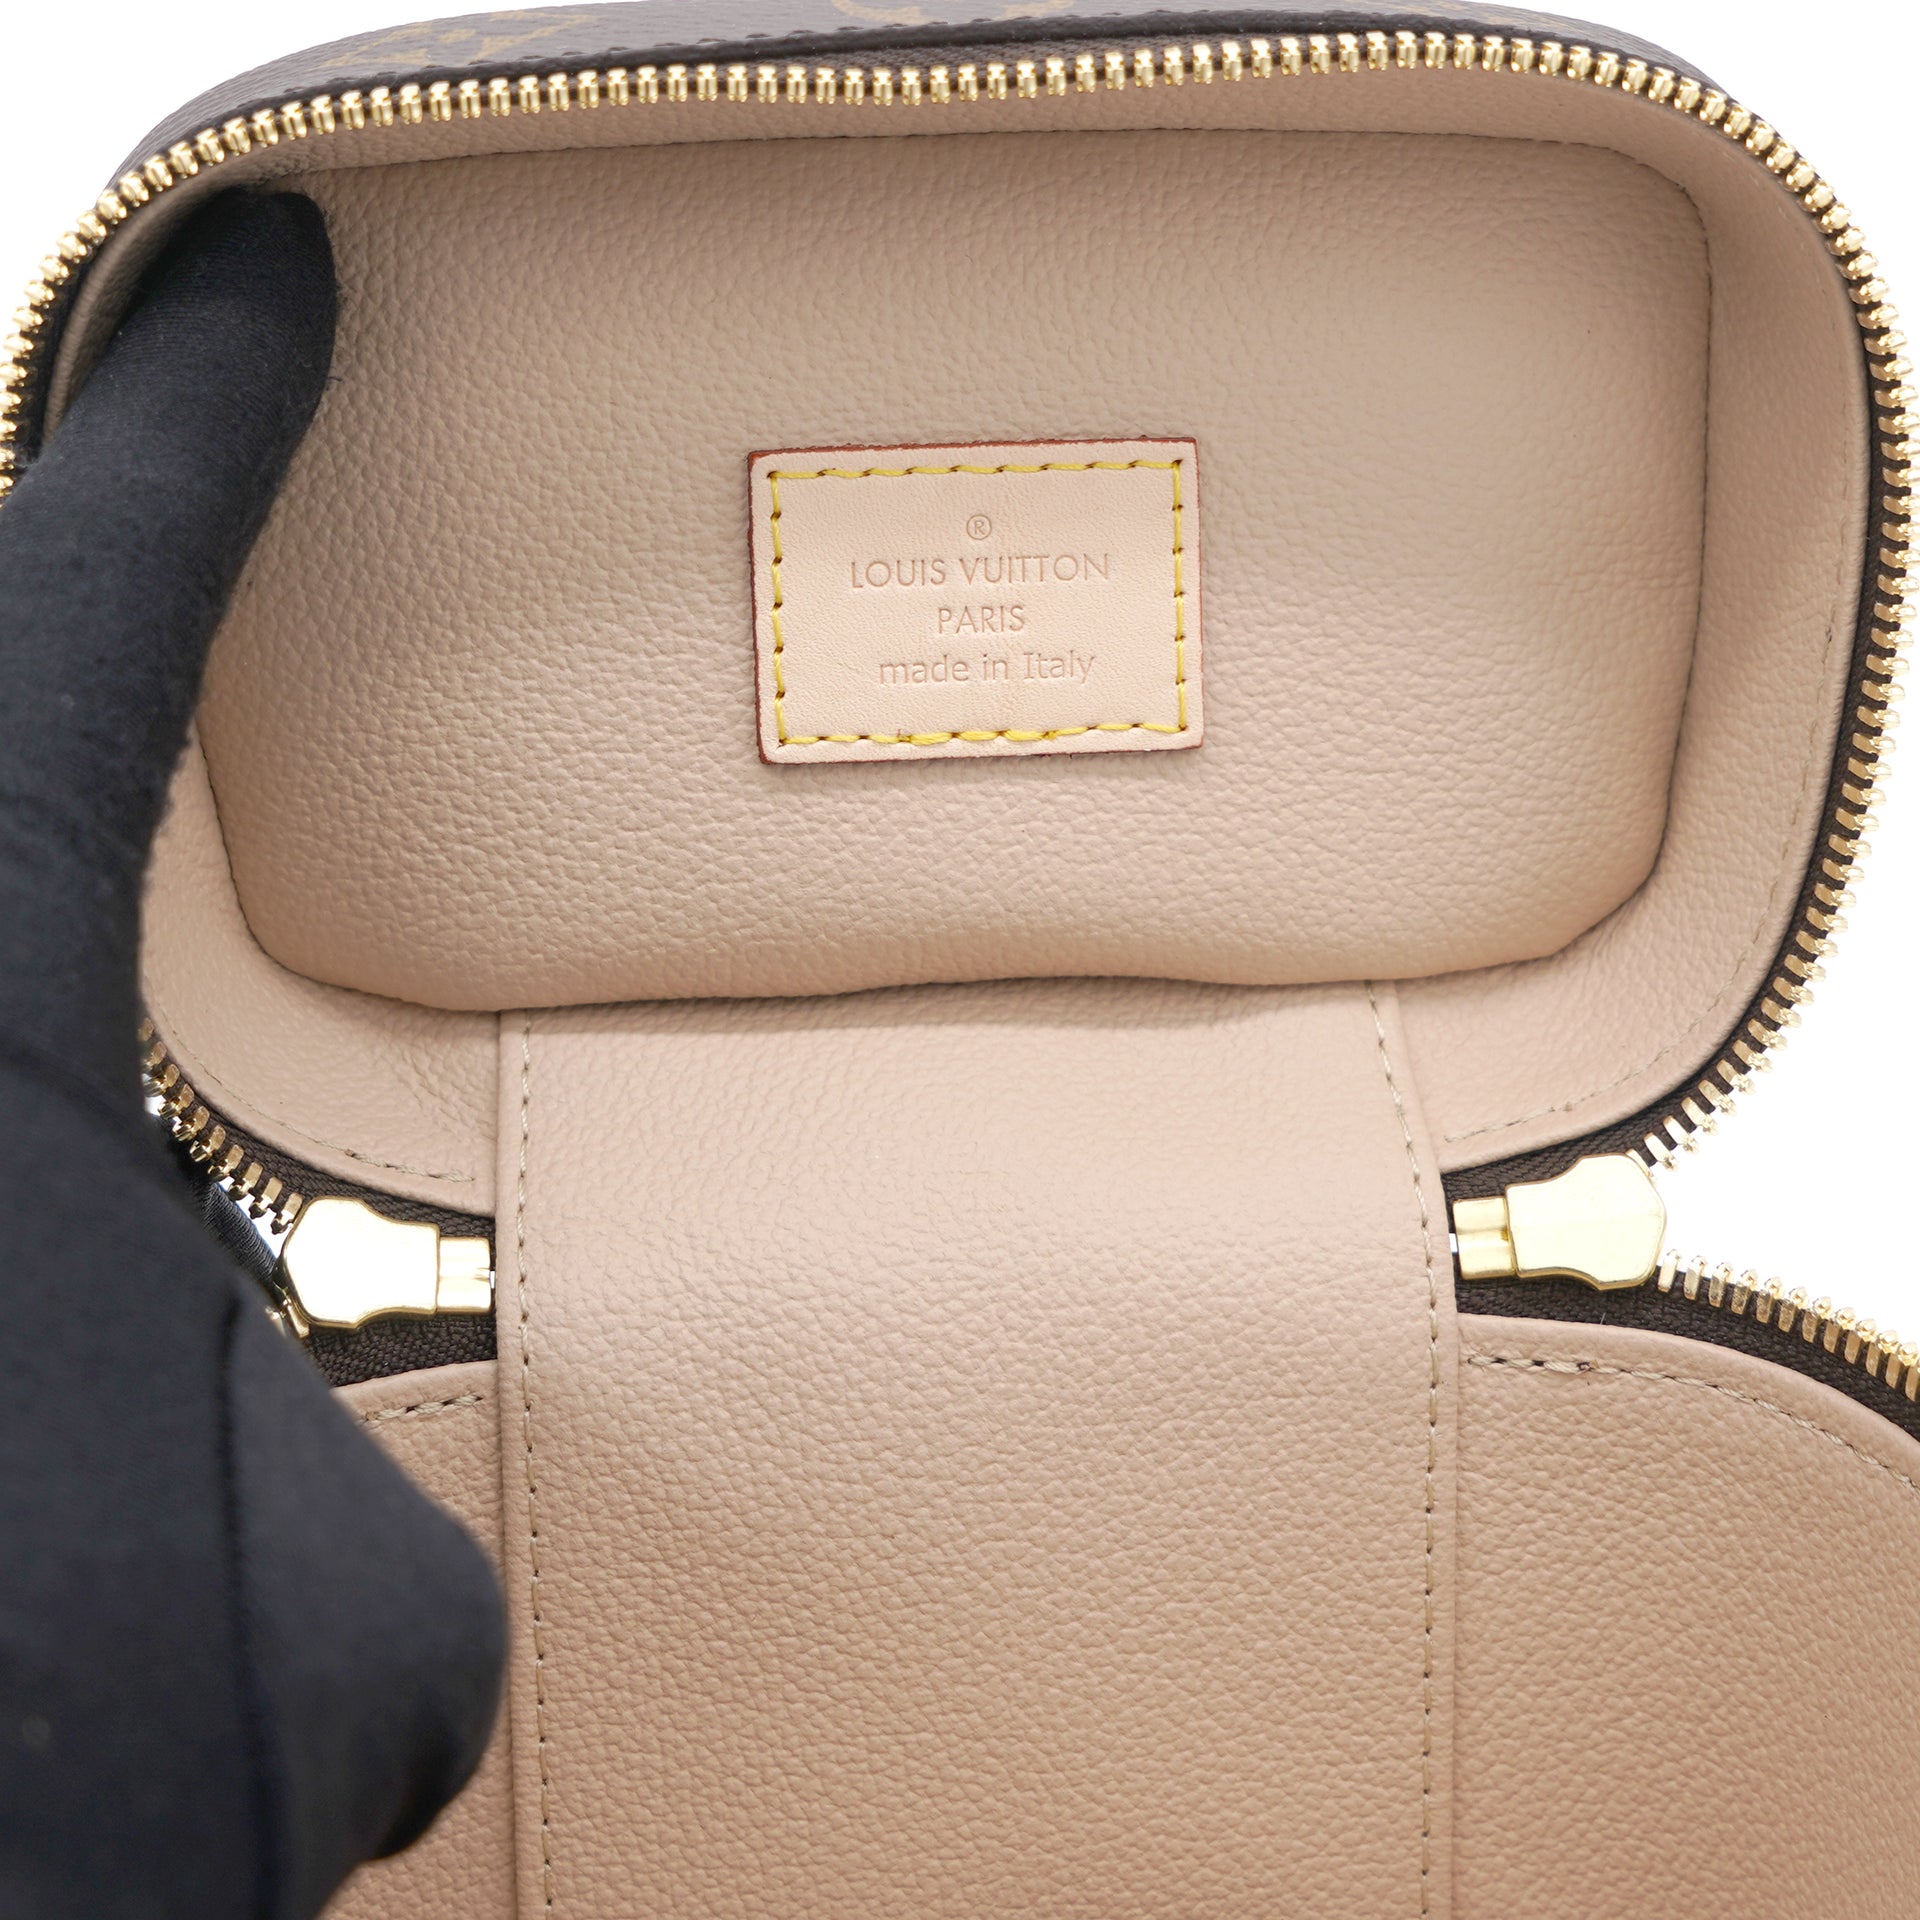 LV Nice Nano 100% original, Women's Fashion, Bags & Wallets